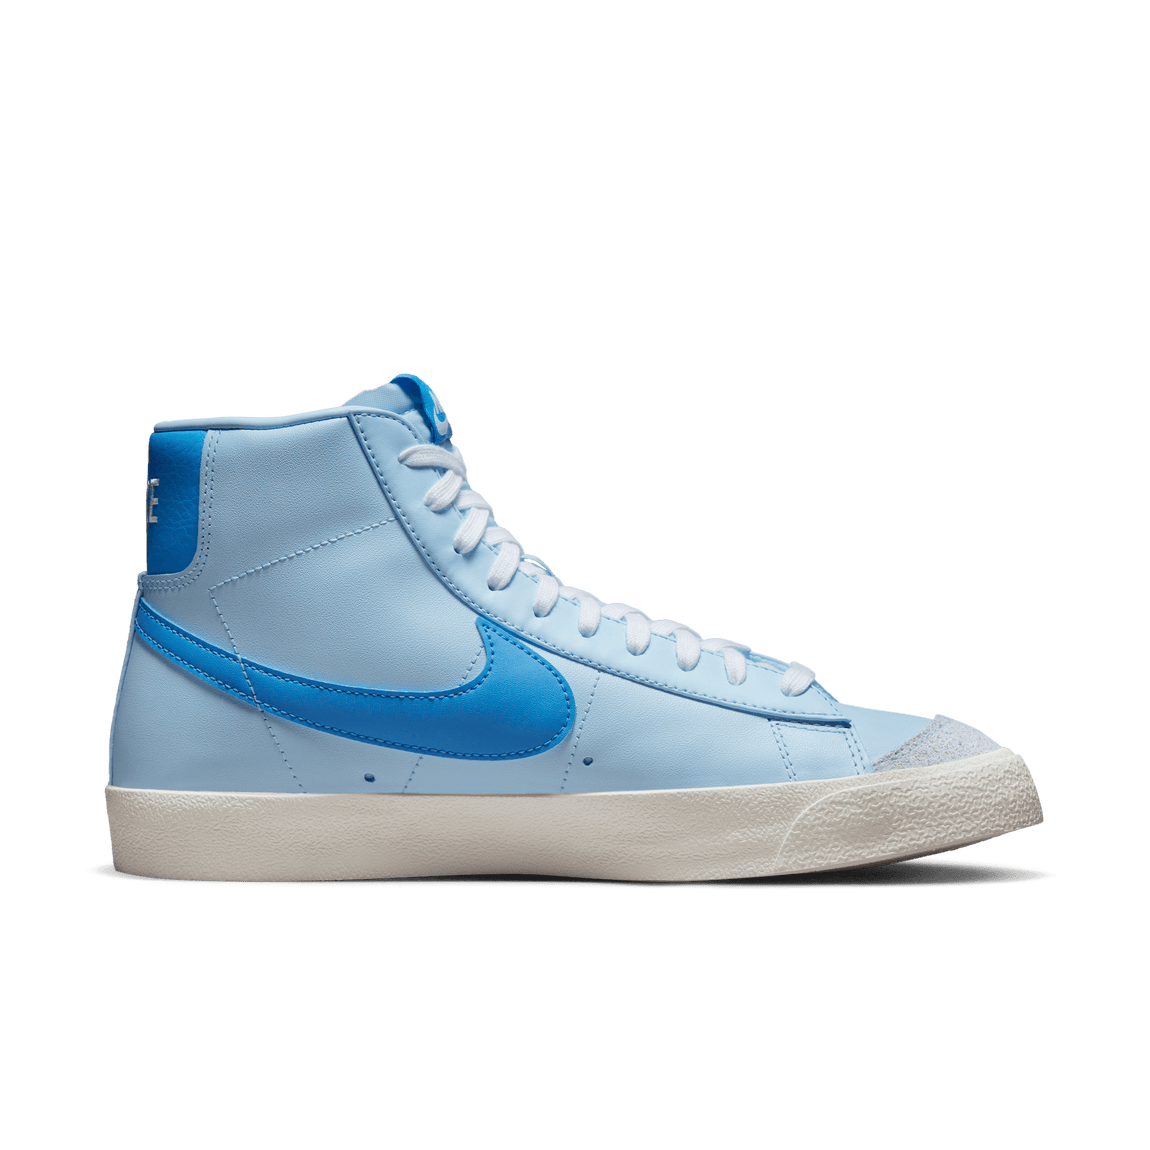 Nike Blazer Mid '77 VNTG (Celestine Blue/University Blue-Sail) - Nike Blazer Mid '77 VNTG (Celestine Blue/University Blue-Sail) - 